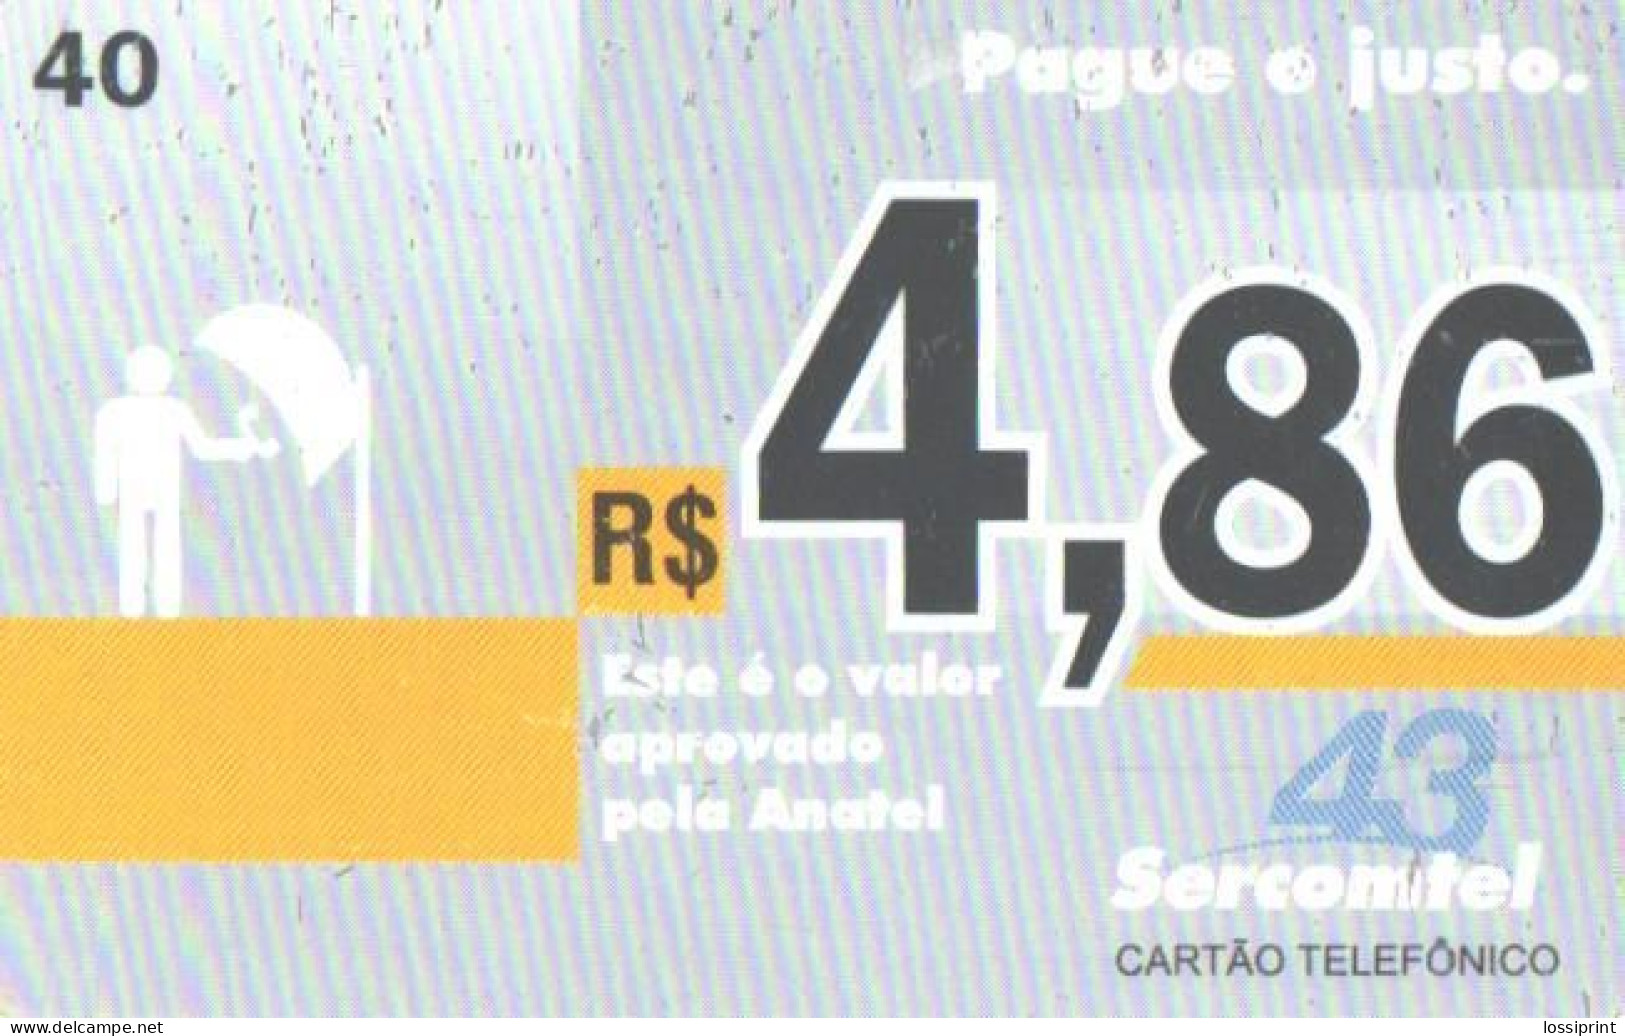 Brazil:Brasil:Used Phonecard, Anatel, Sercomtel, 40 Units, 4,86, Tirage 150000, 2008 - Brasilien